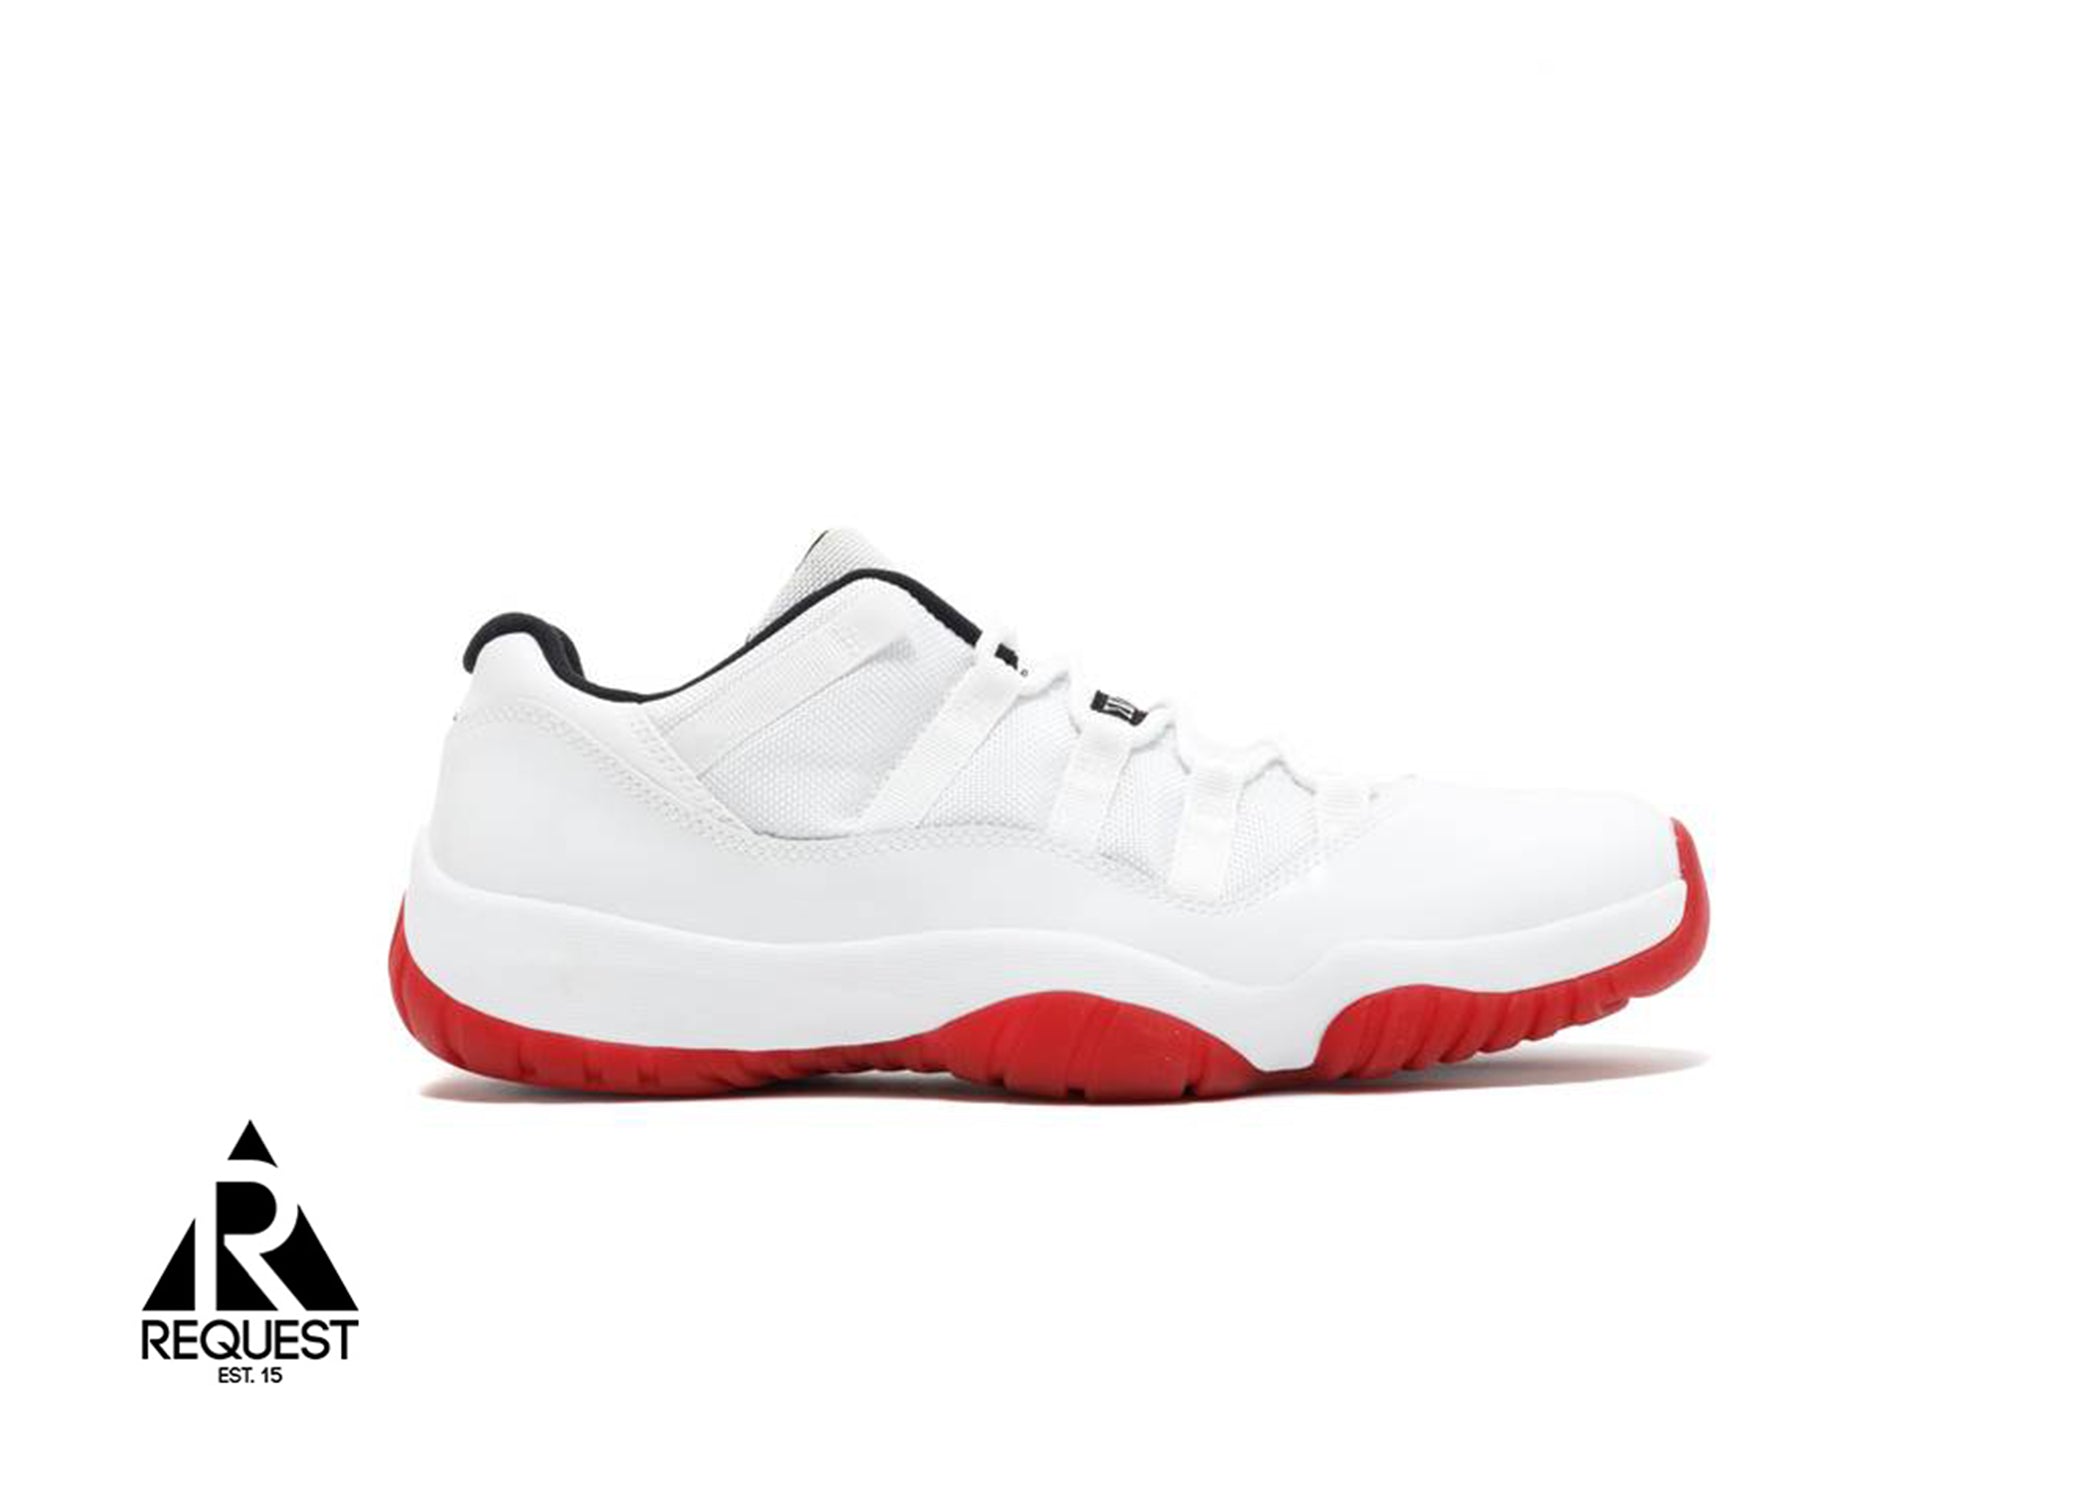 Air Jordan 11 Retro Low “White Red”